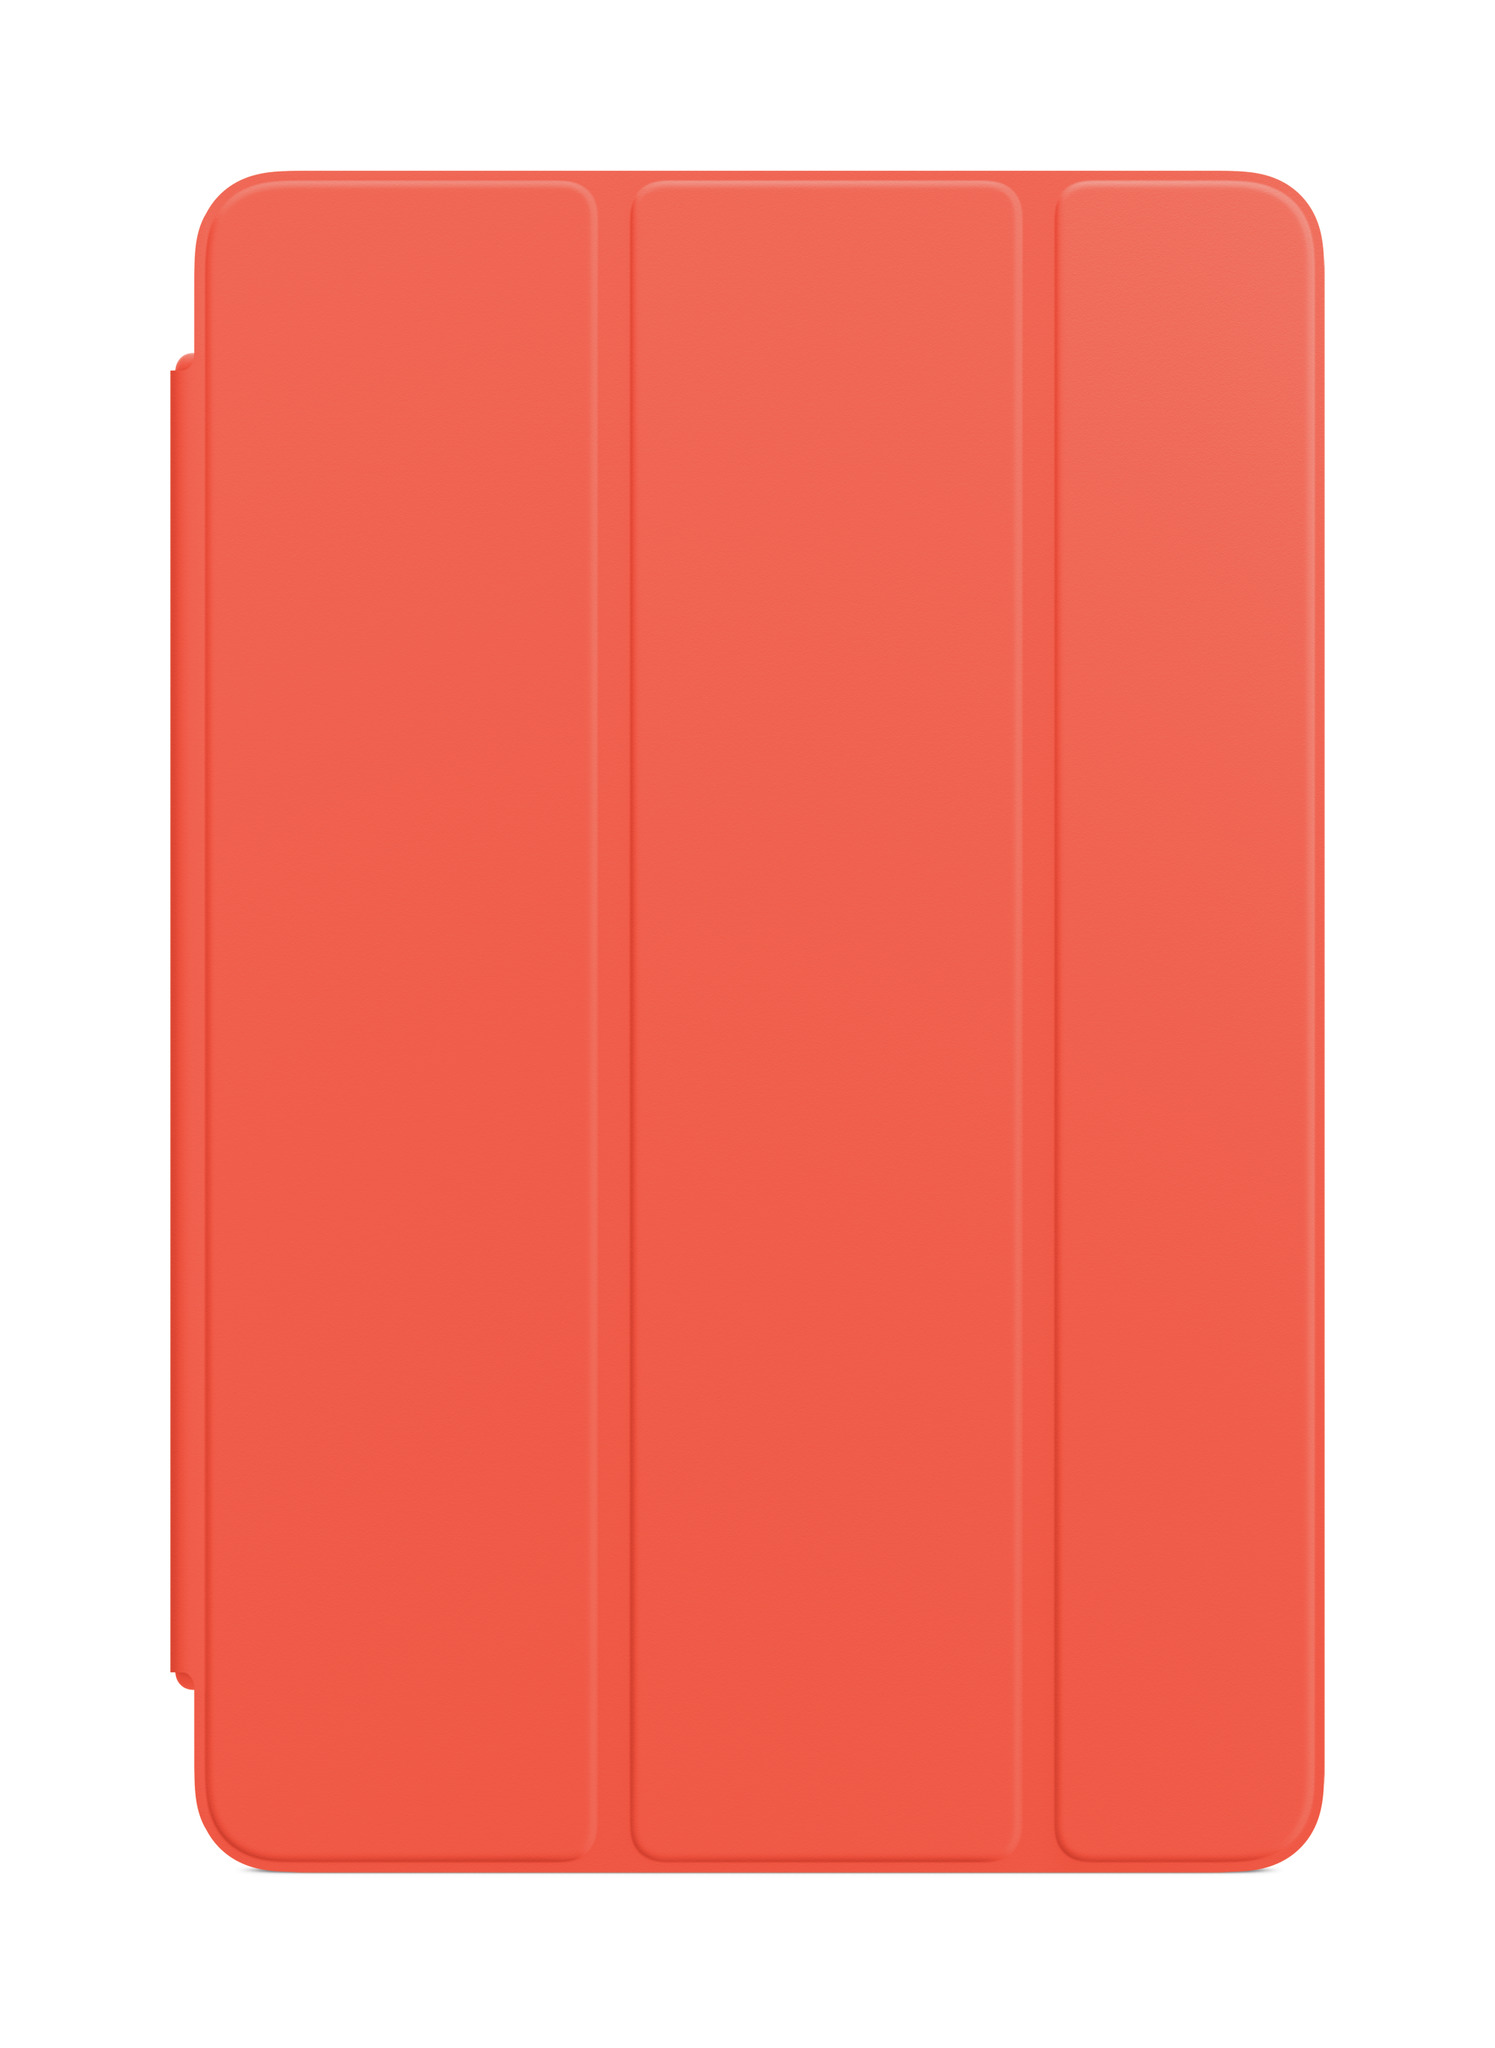 Apple Smart Cover for iPad mini Electric Orange, MJM63ZM/A Apple - фото 1